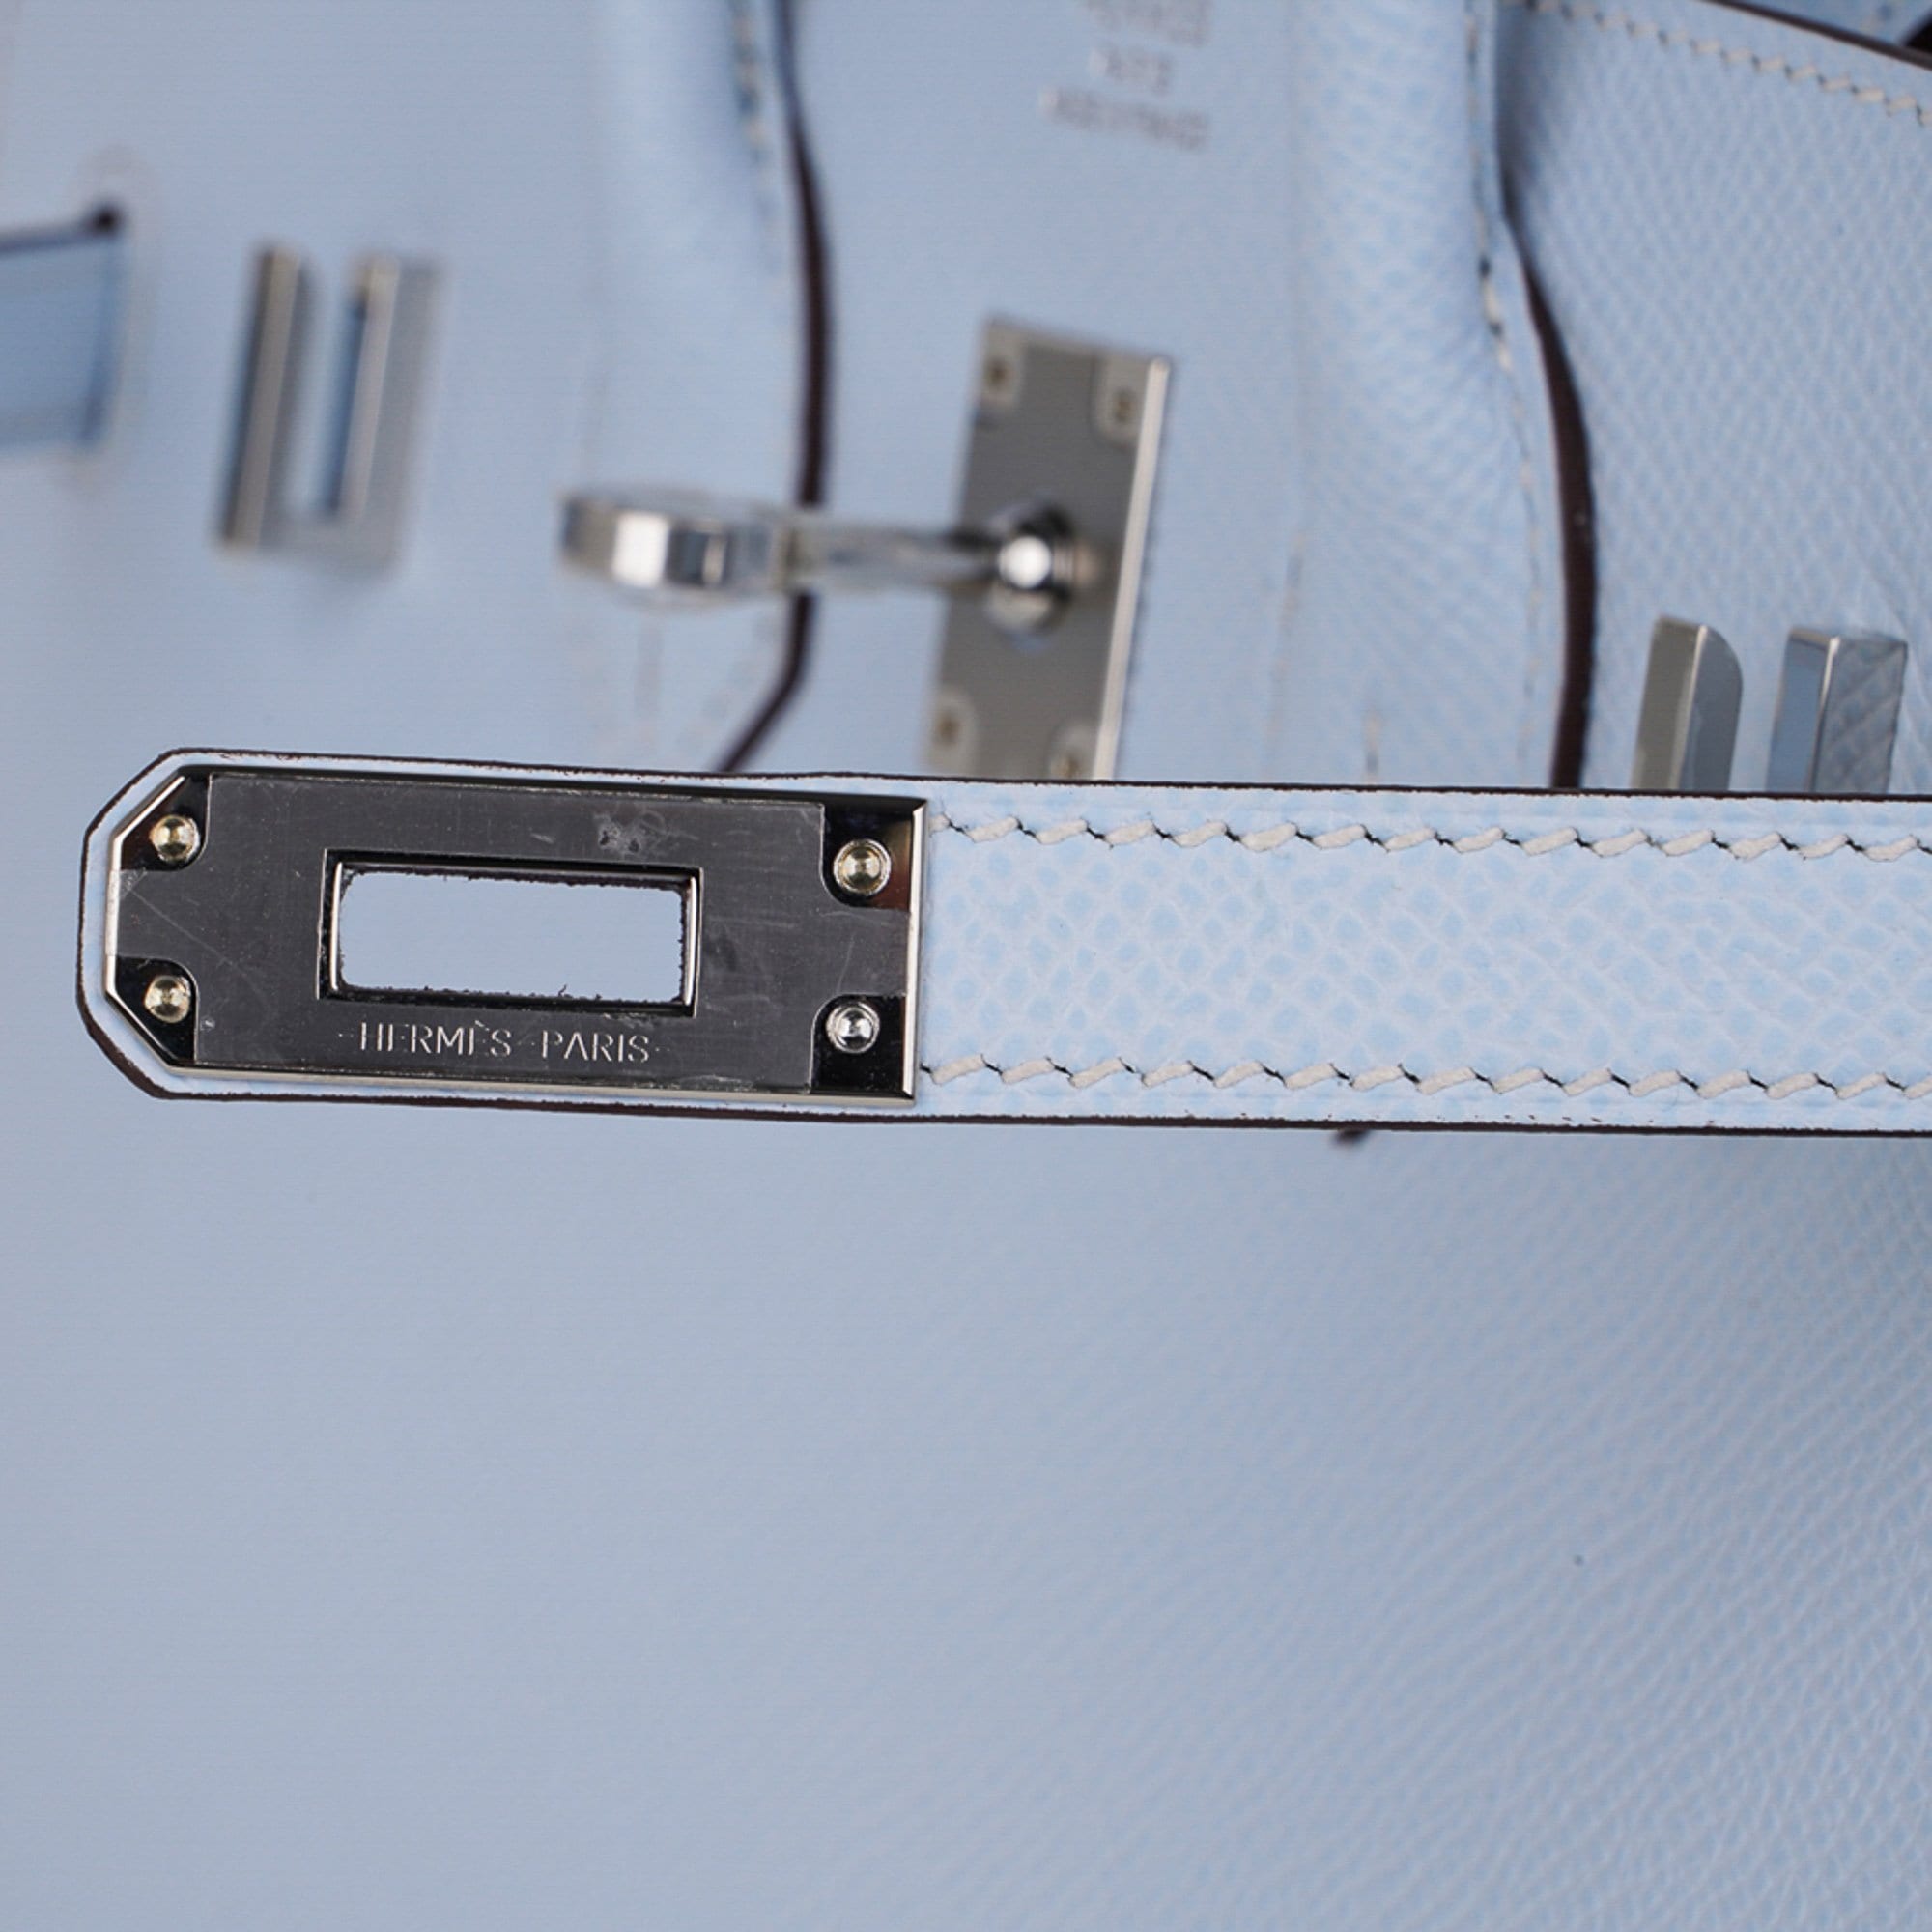 Hermès Birkin 25 Sellier Epsom Bleu Brume PHW ○ Labellov ○ Buy and Sell  Authentic Luxury